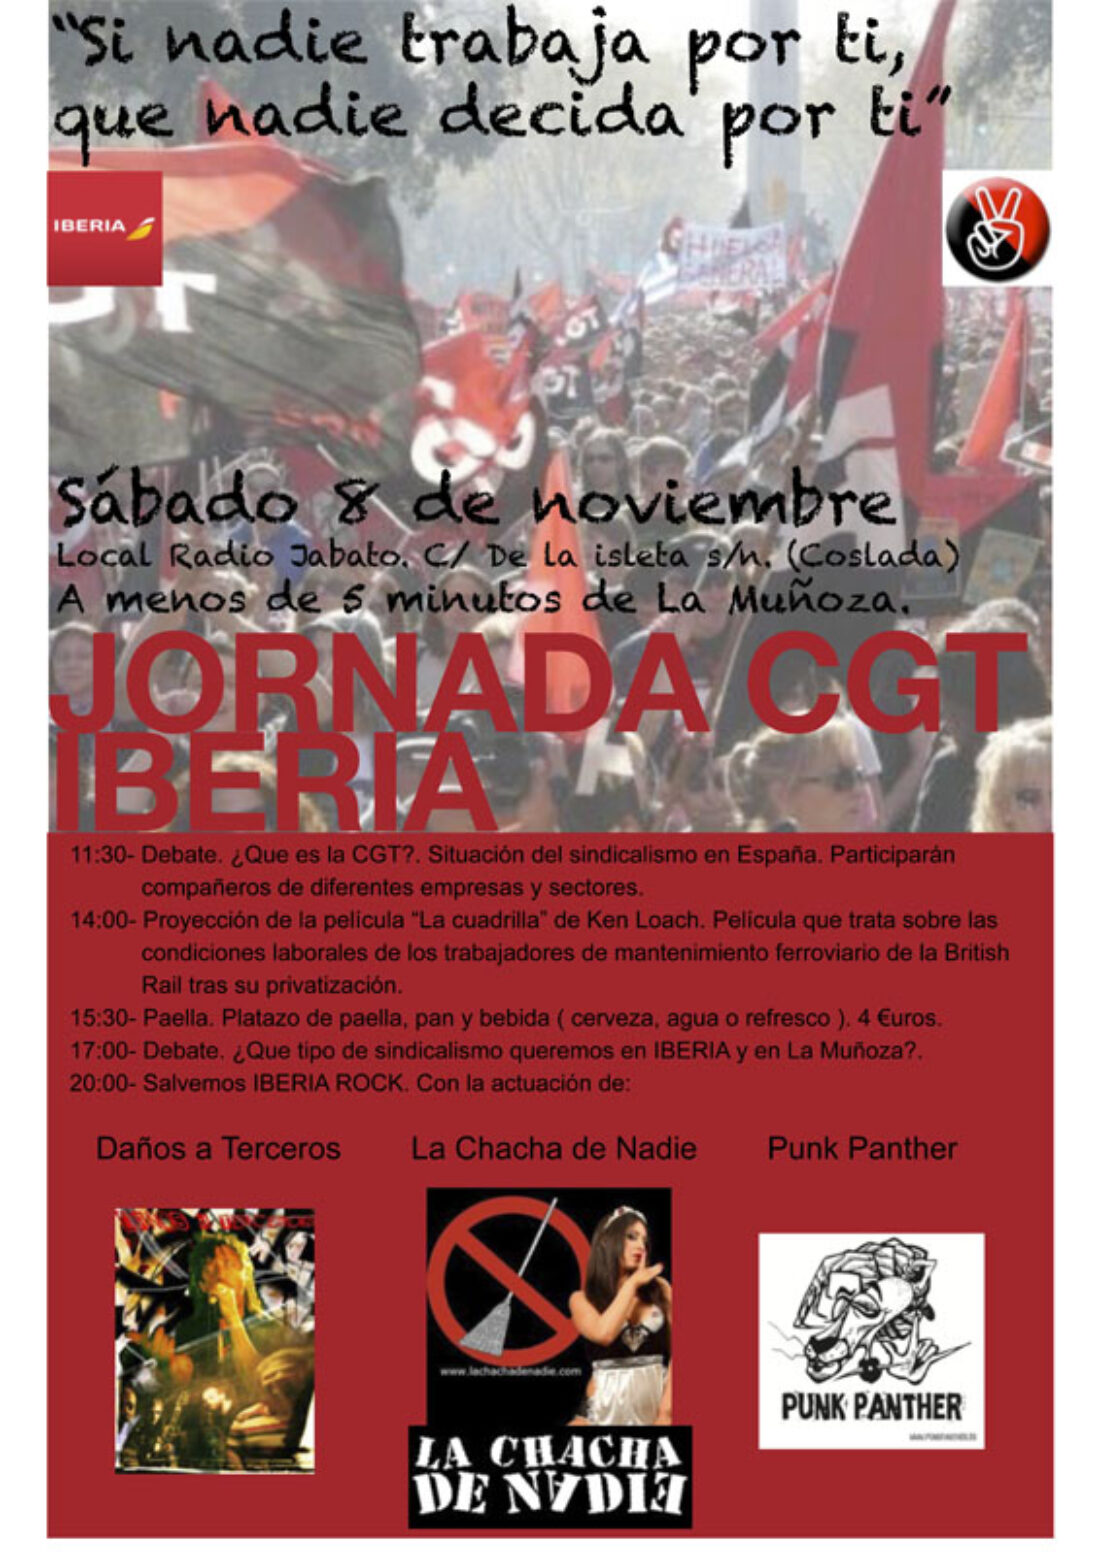 8-N: Jornada CGT Iberia, «Si nadie trabaja por ti, que nadie decida por ti»